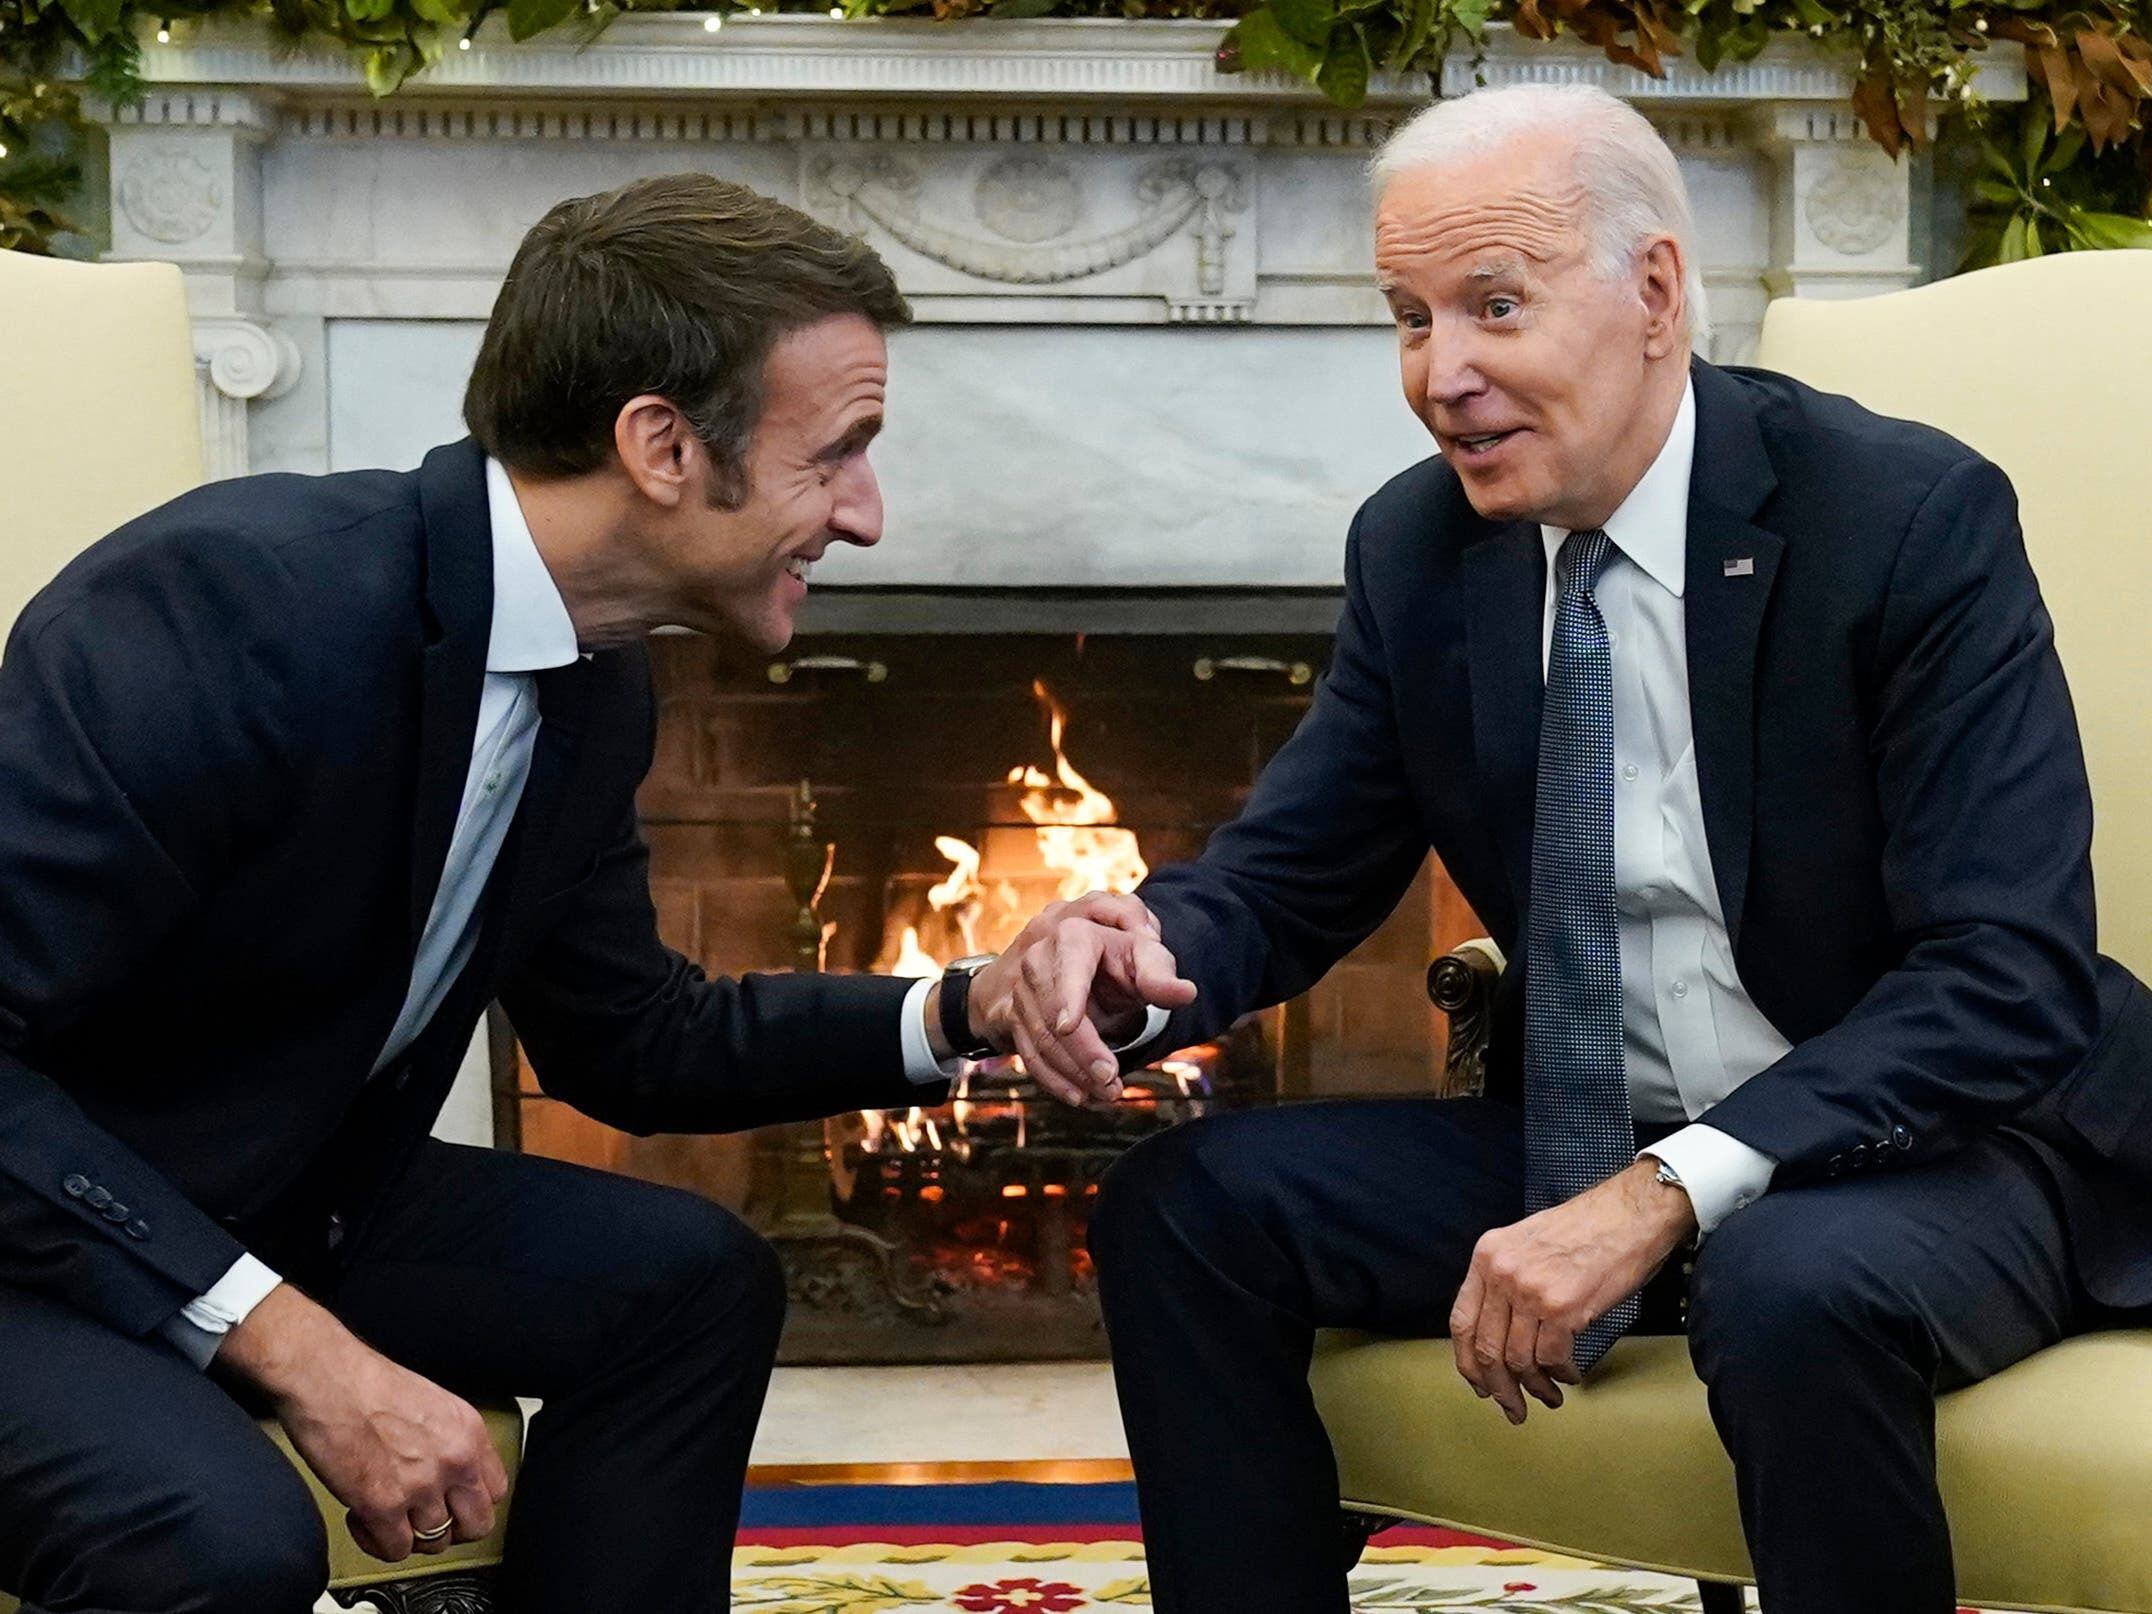 Joe Biden admits US climate law has ‘glitches’ after Emmanuel Macron criticism